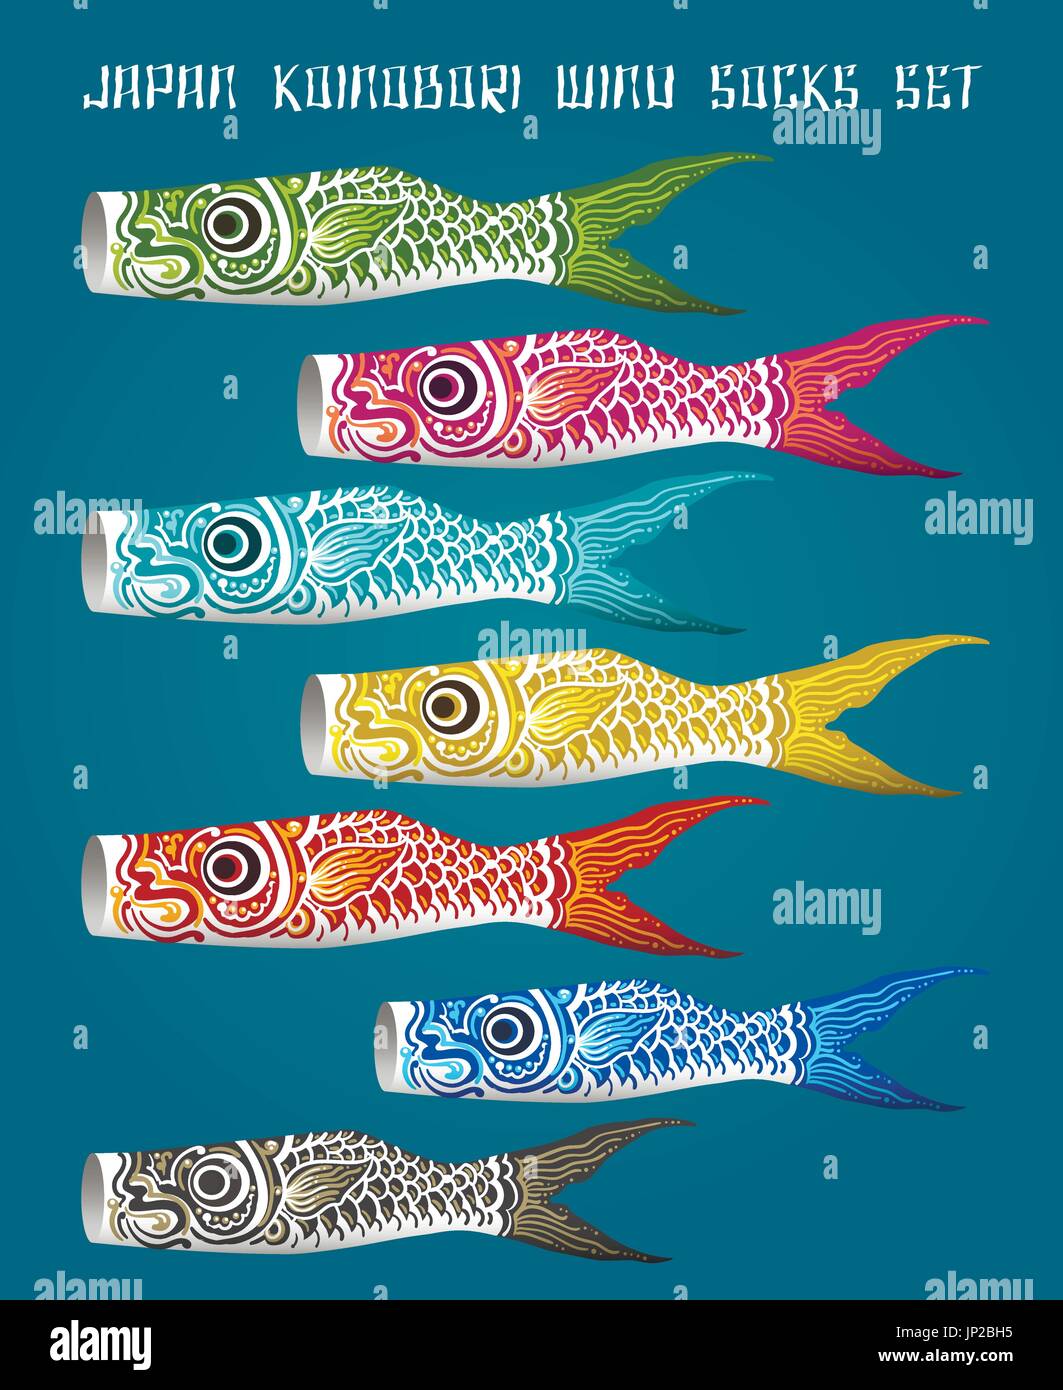 Japan fish flag set. Flying or carp streamers for japanese childrens day vector illustration Stock Vector